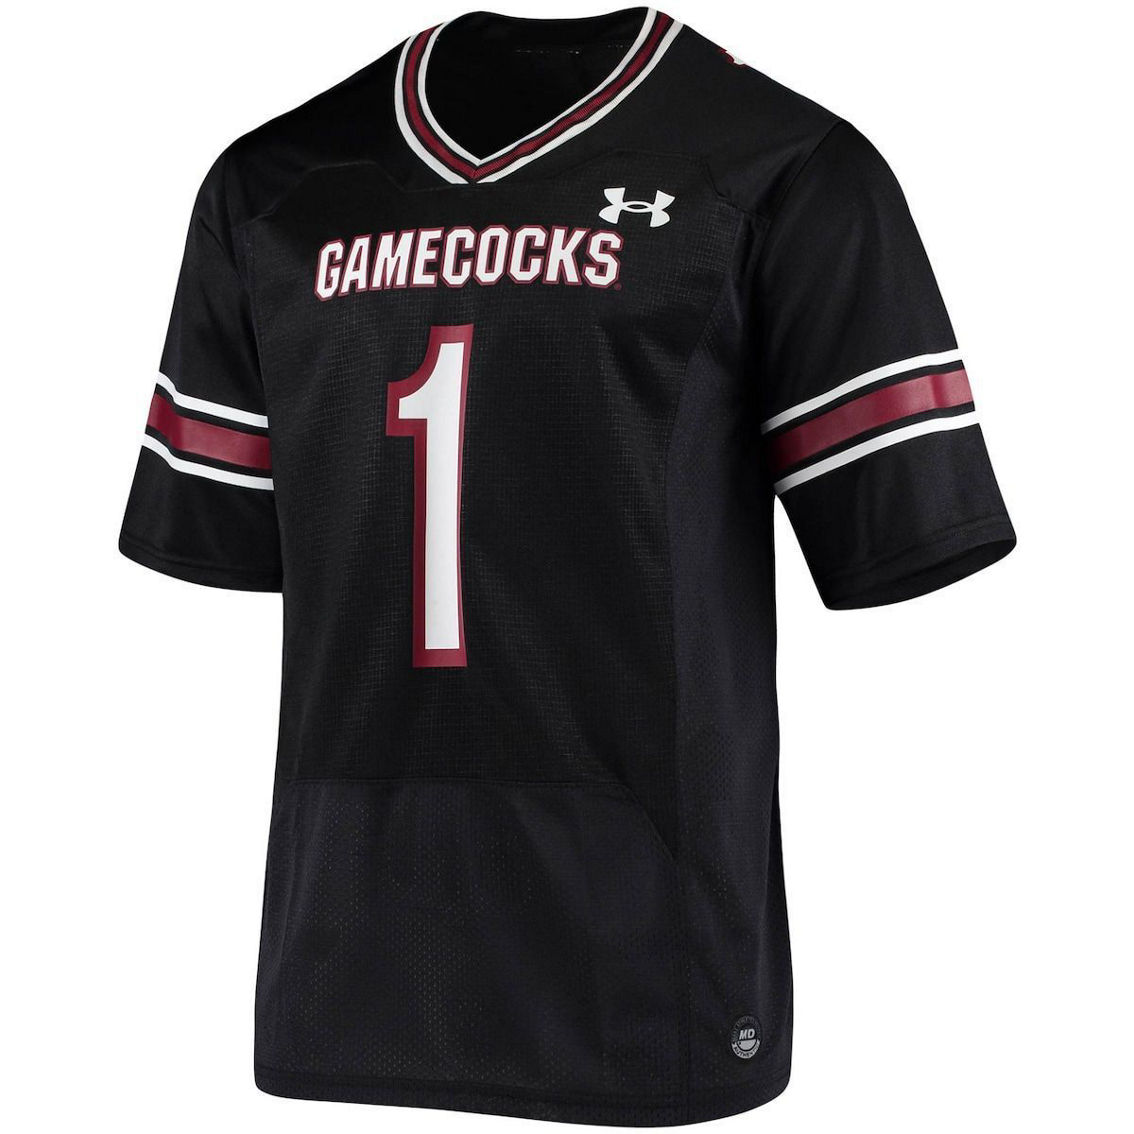 Under Armour Men's #1 Black South Carolina Gamecocks Logo Replica Football Jersey - Image 3 of 4